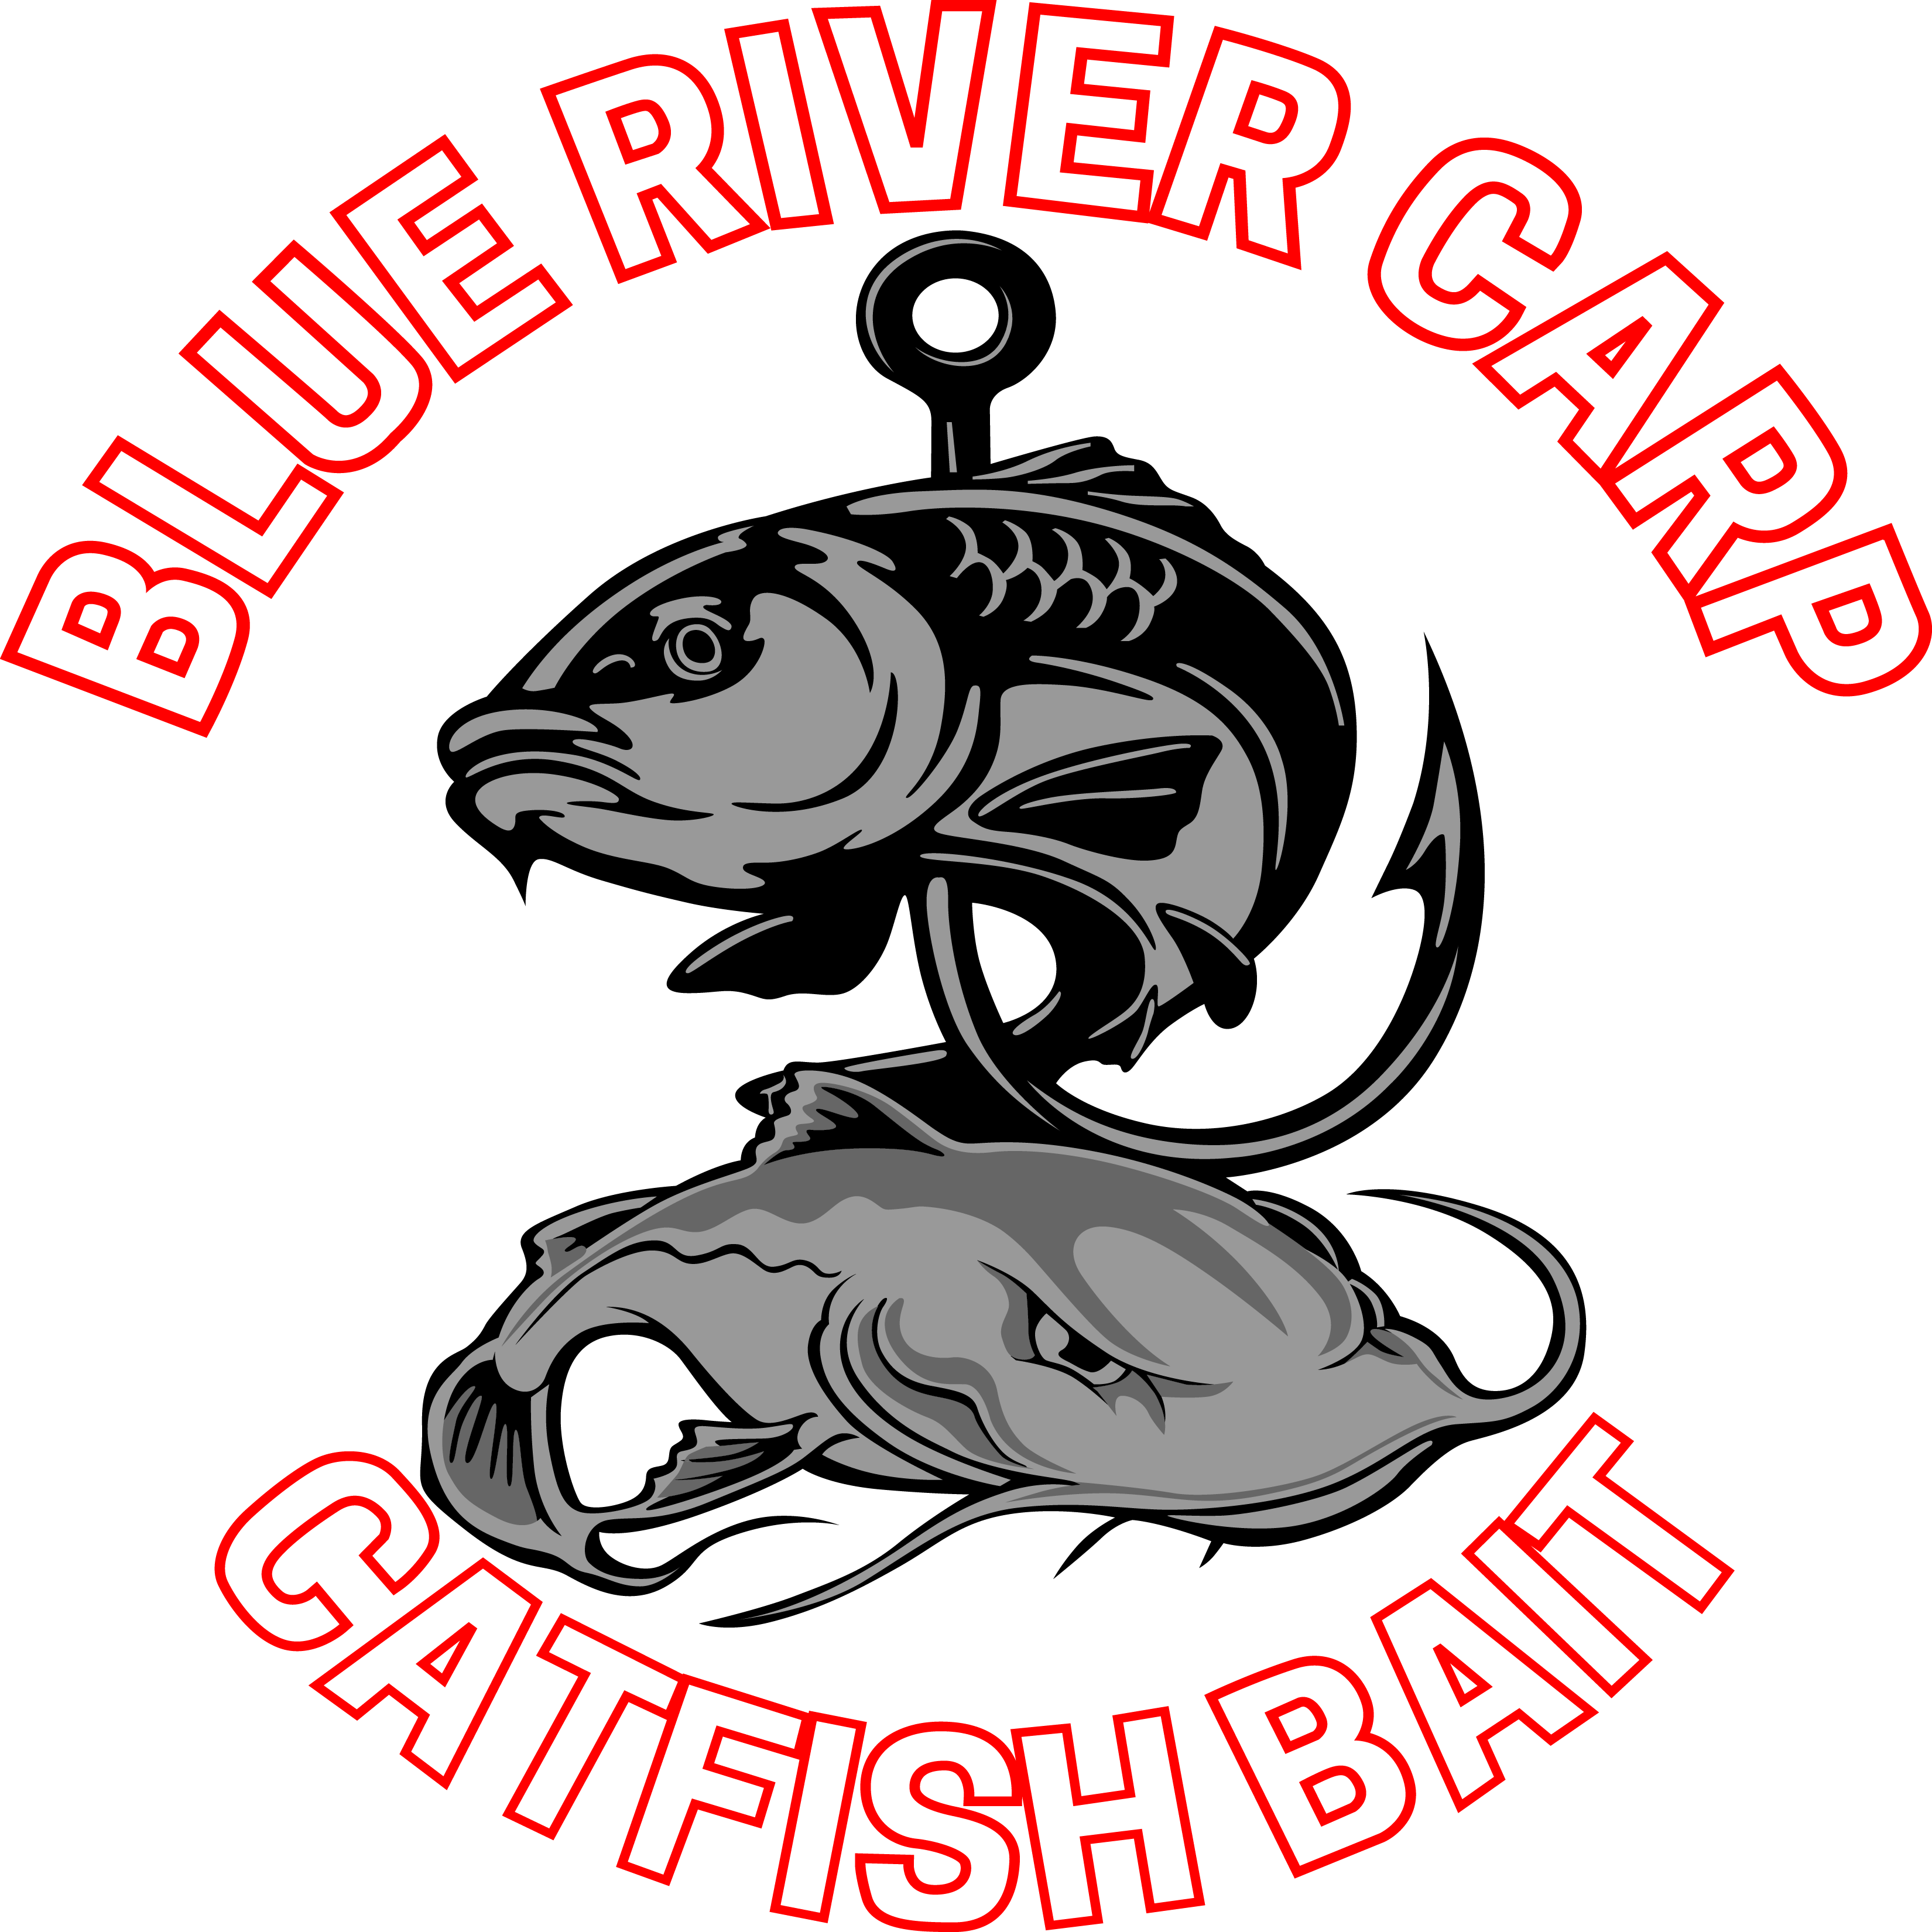 Blue River Carp - Home – Blue River Carp, Inc.